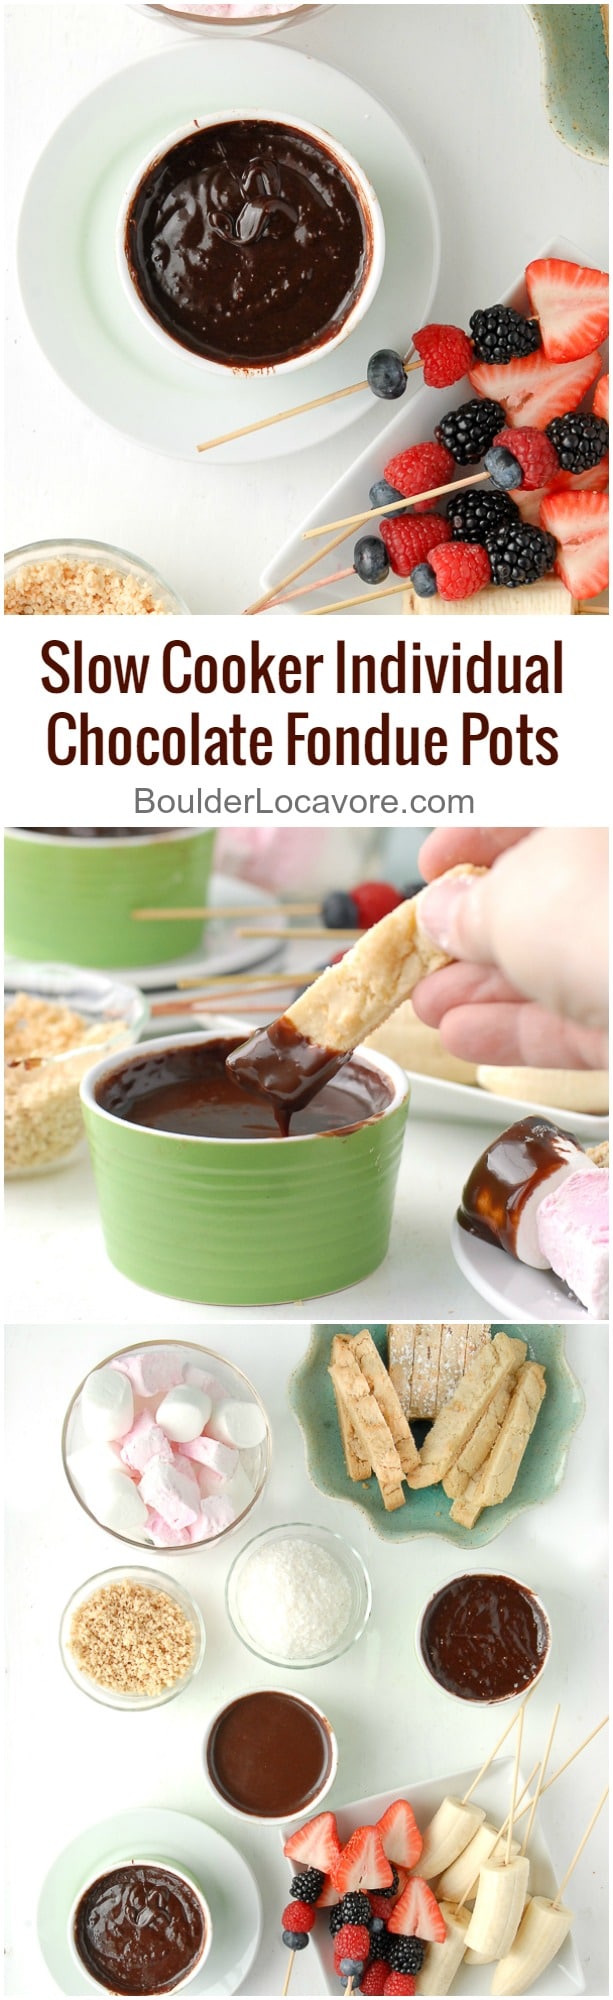 chocolate fondue pots photos collage pin